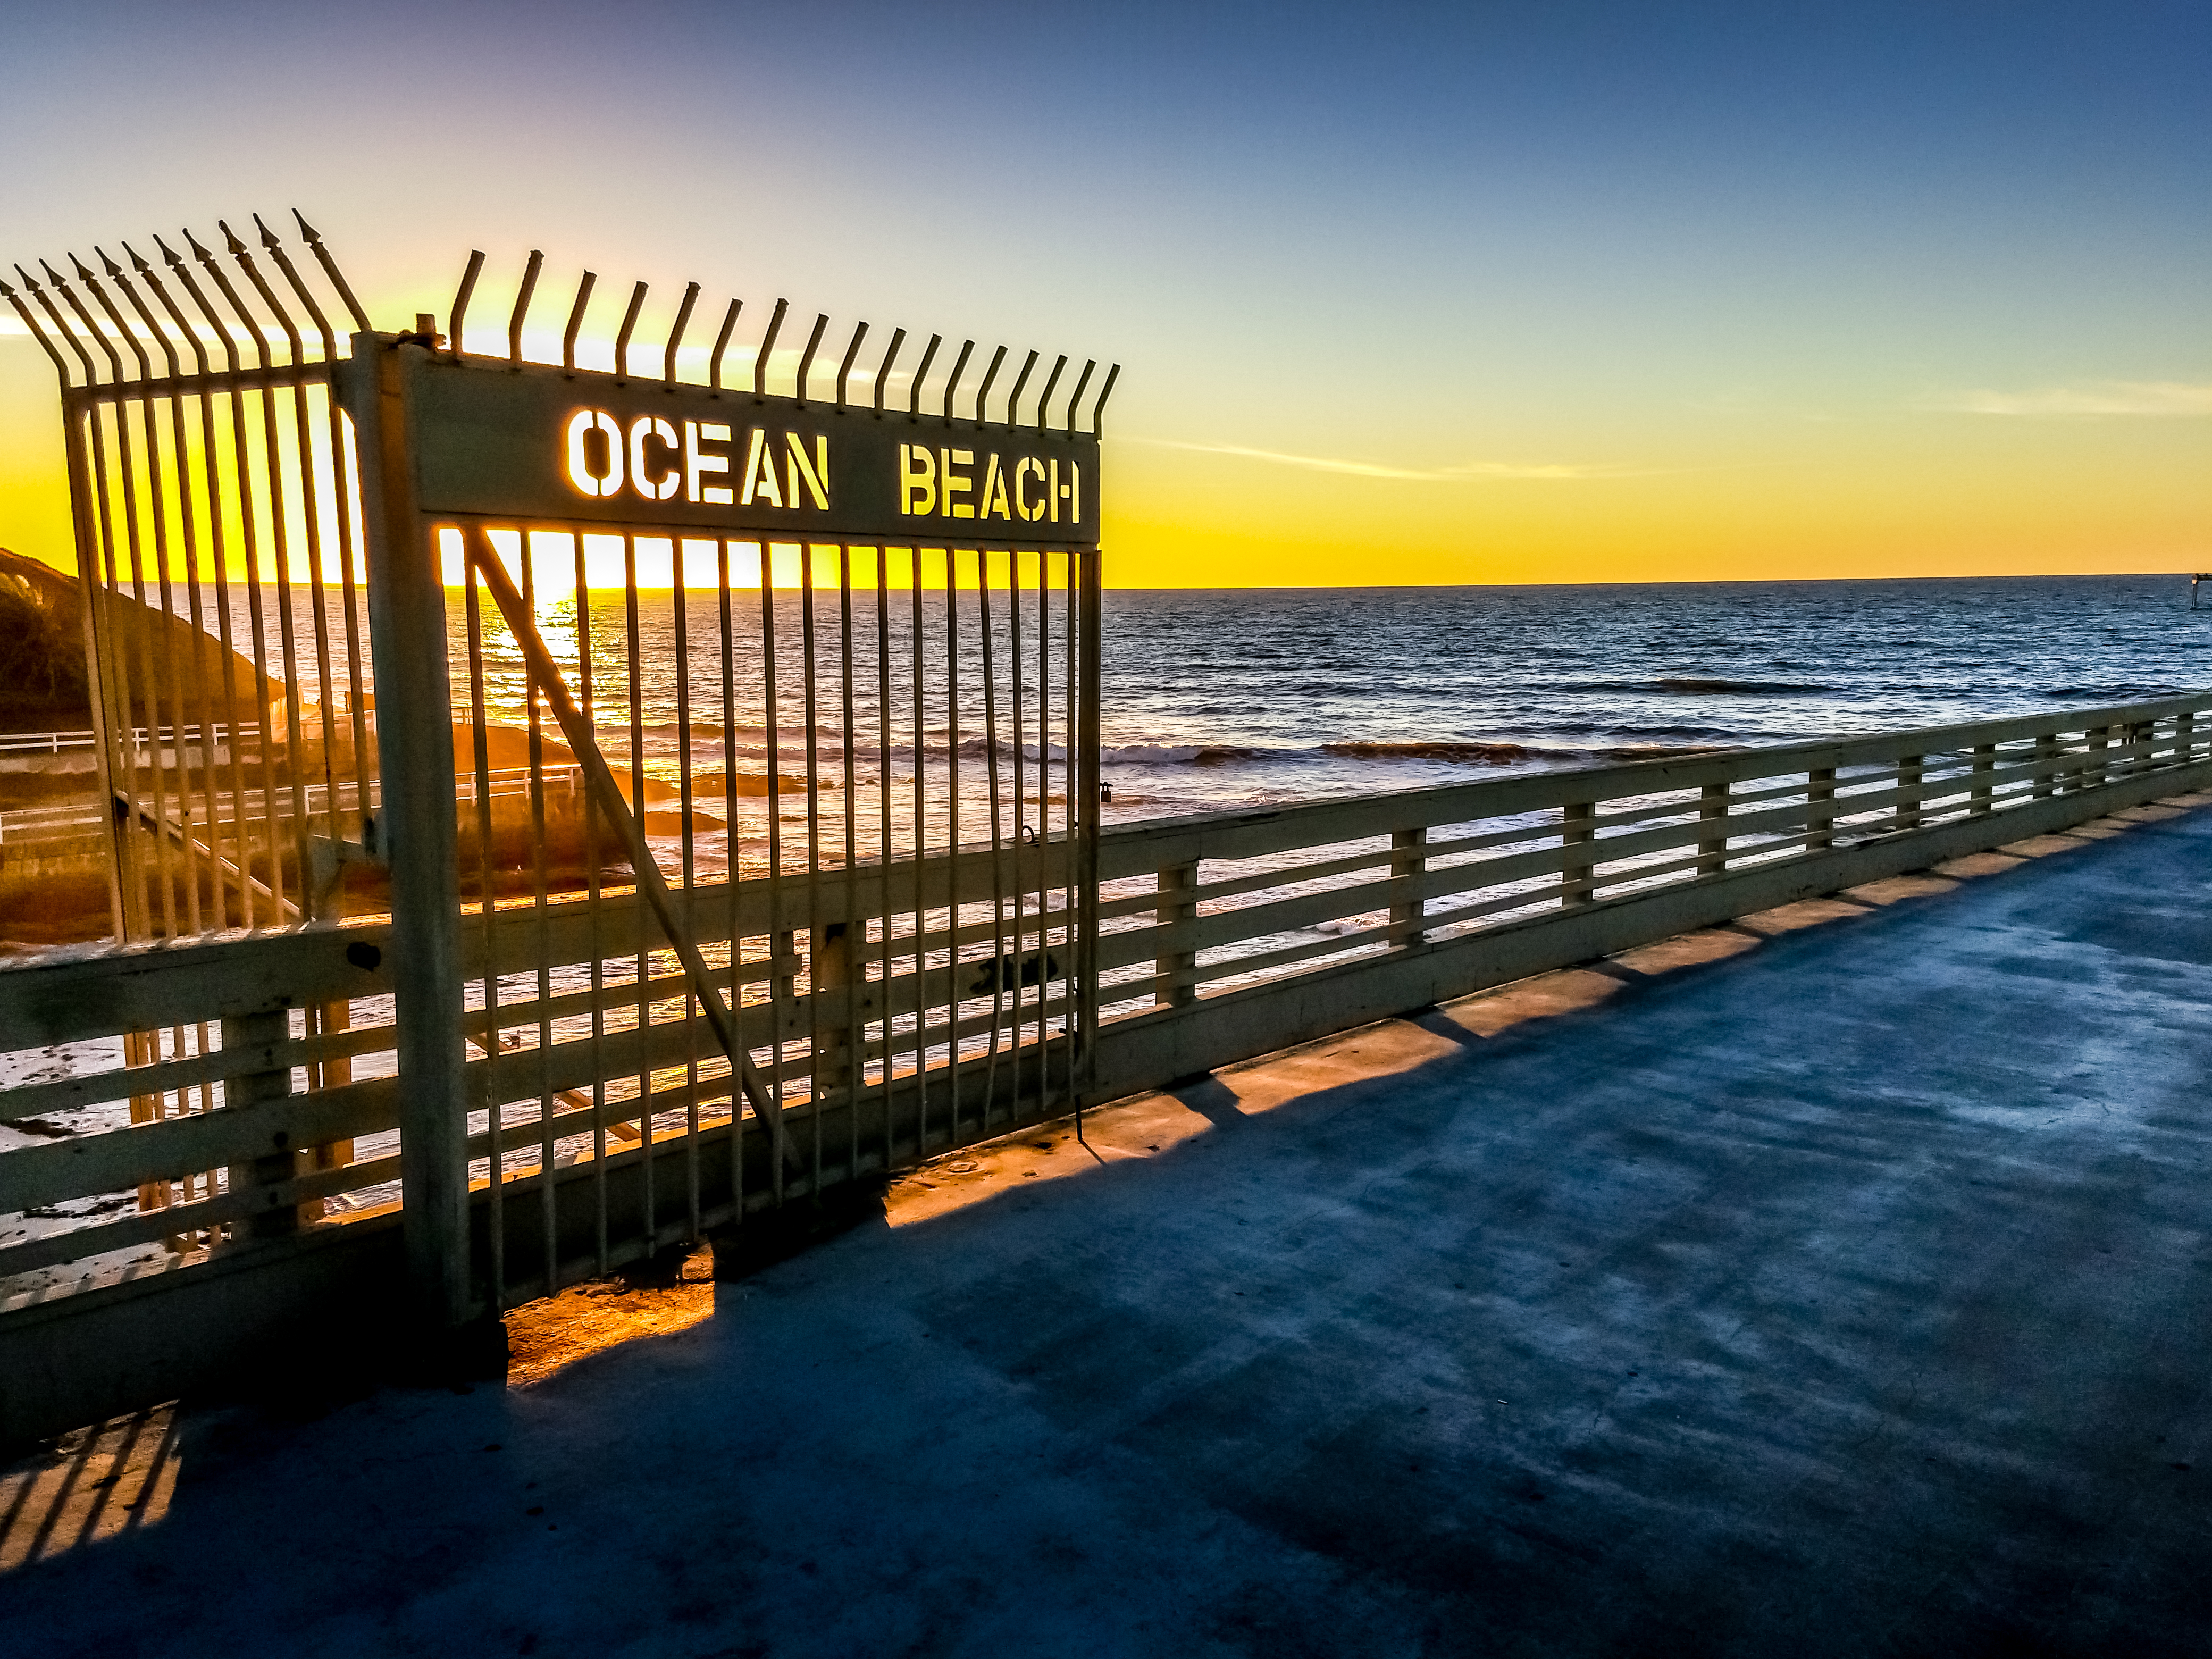 Ocean Beach Pier - Photo by Josh Utley